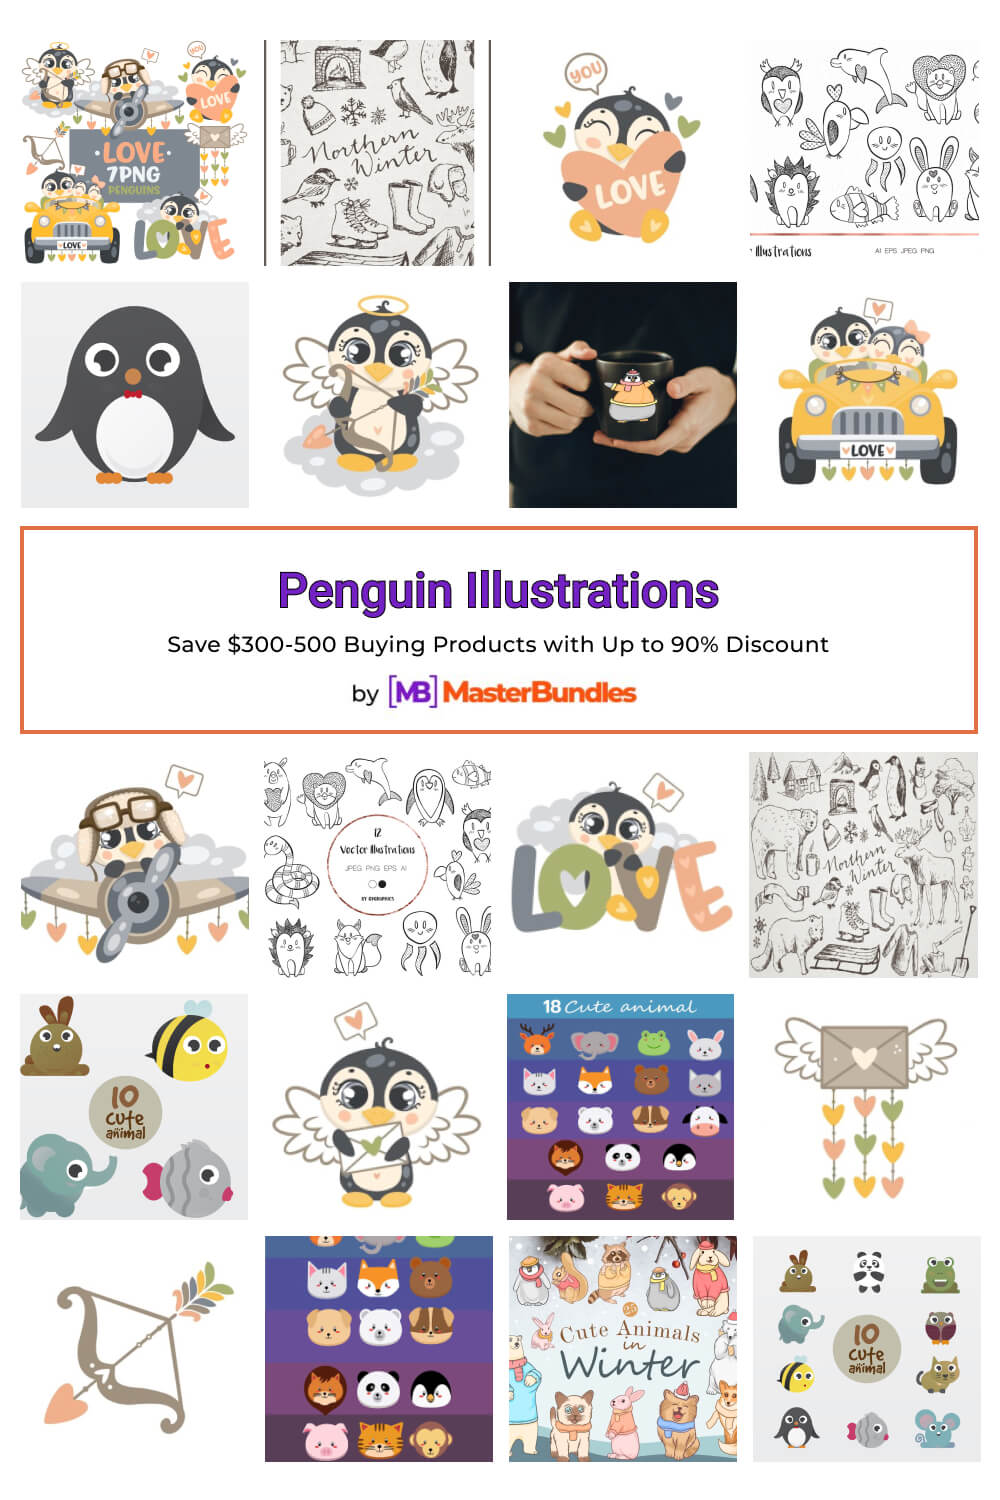 penguin illustrations pinterest image.